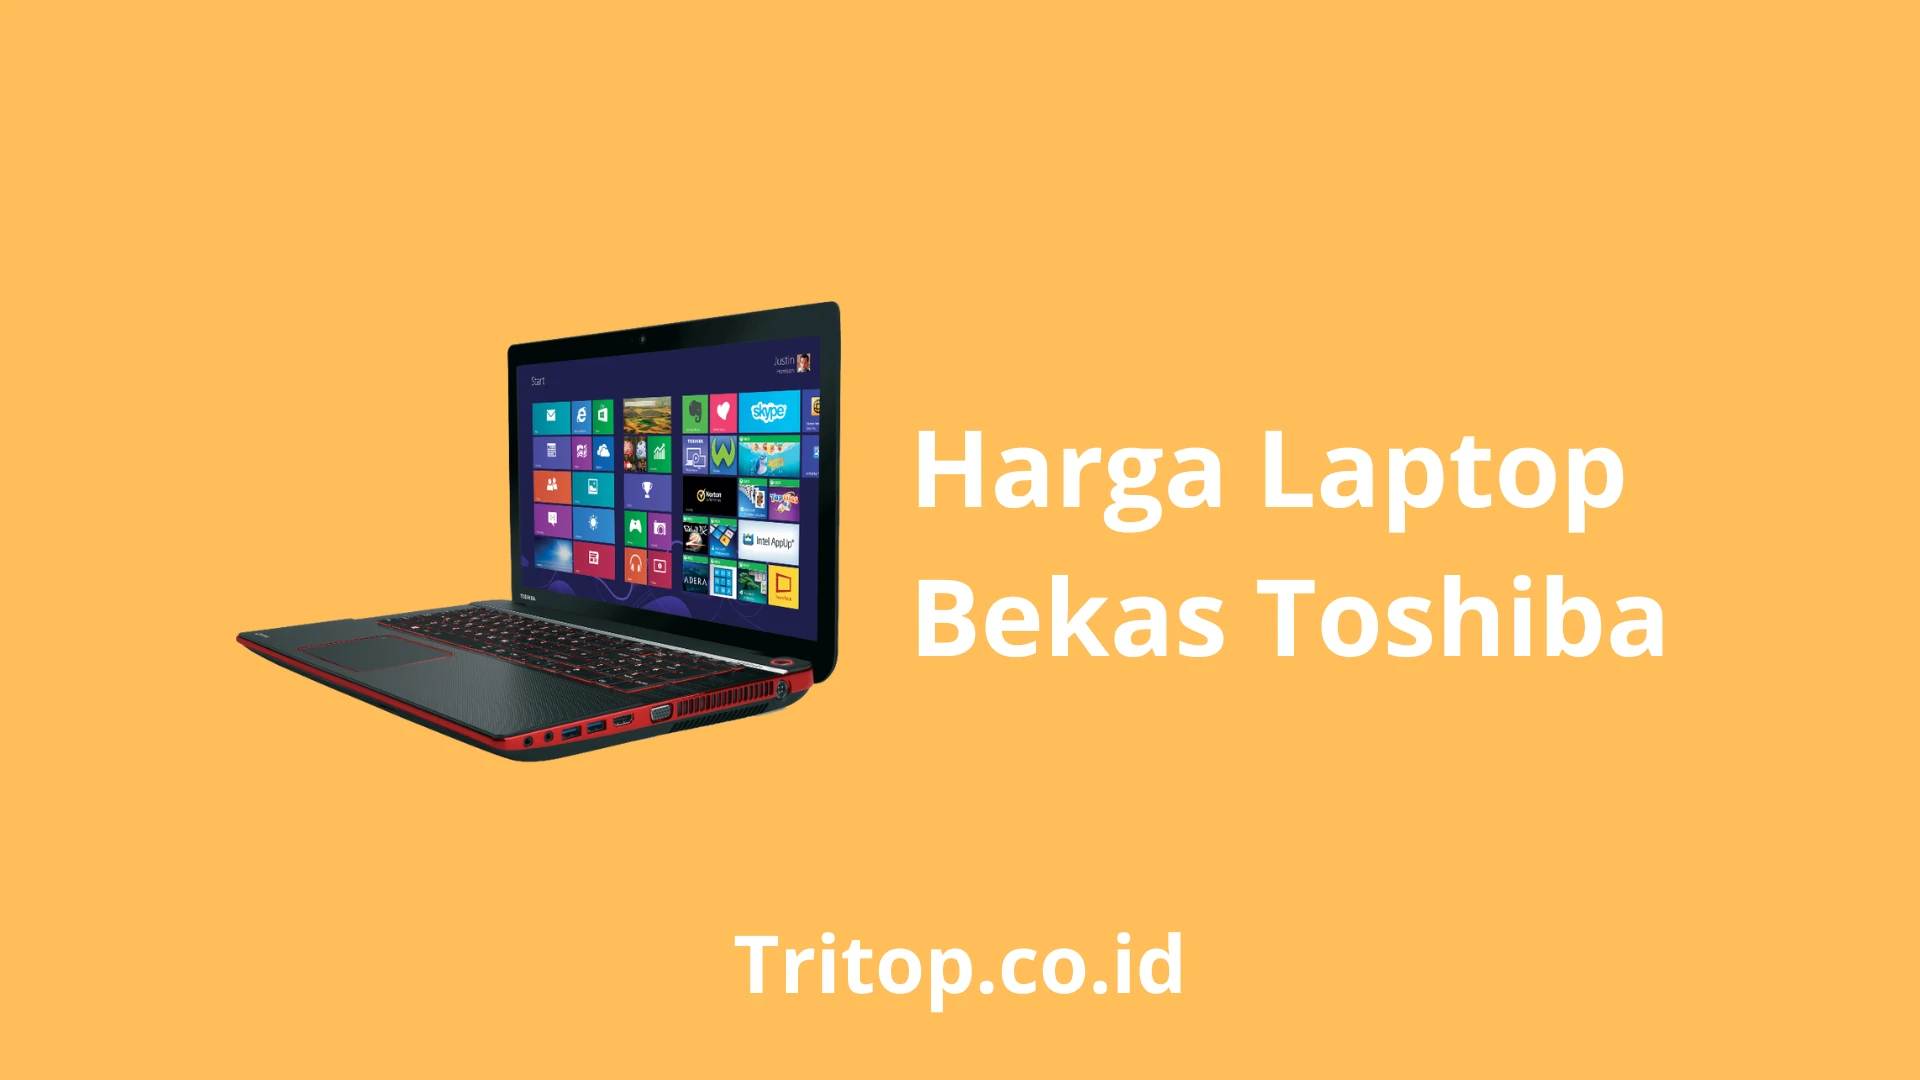 Harga Laptop Bekas Toshiba Tritop.co.id